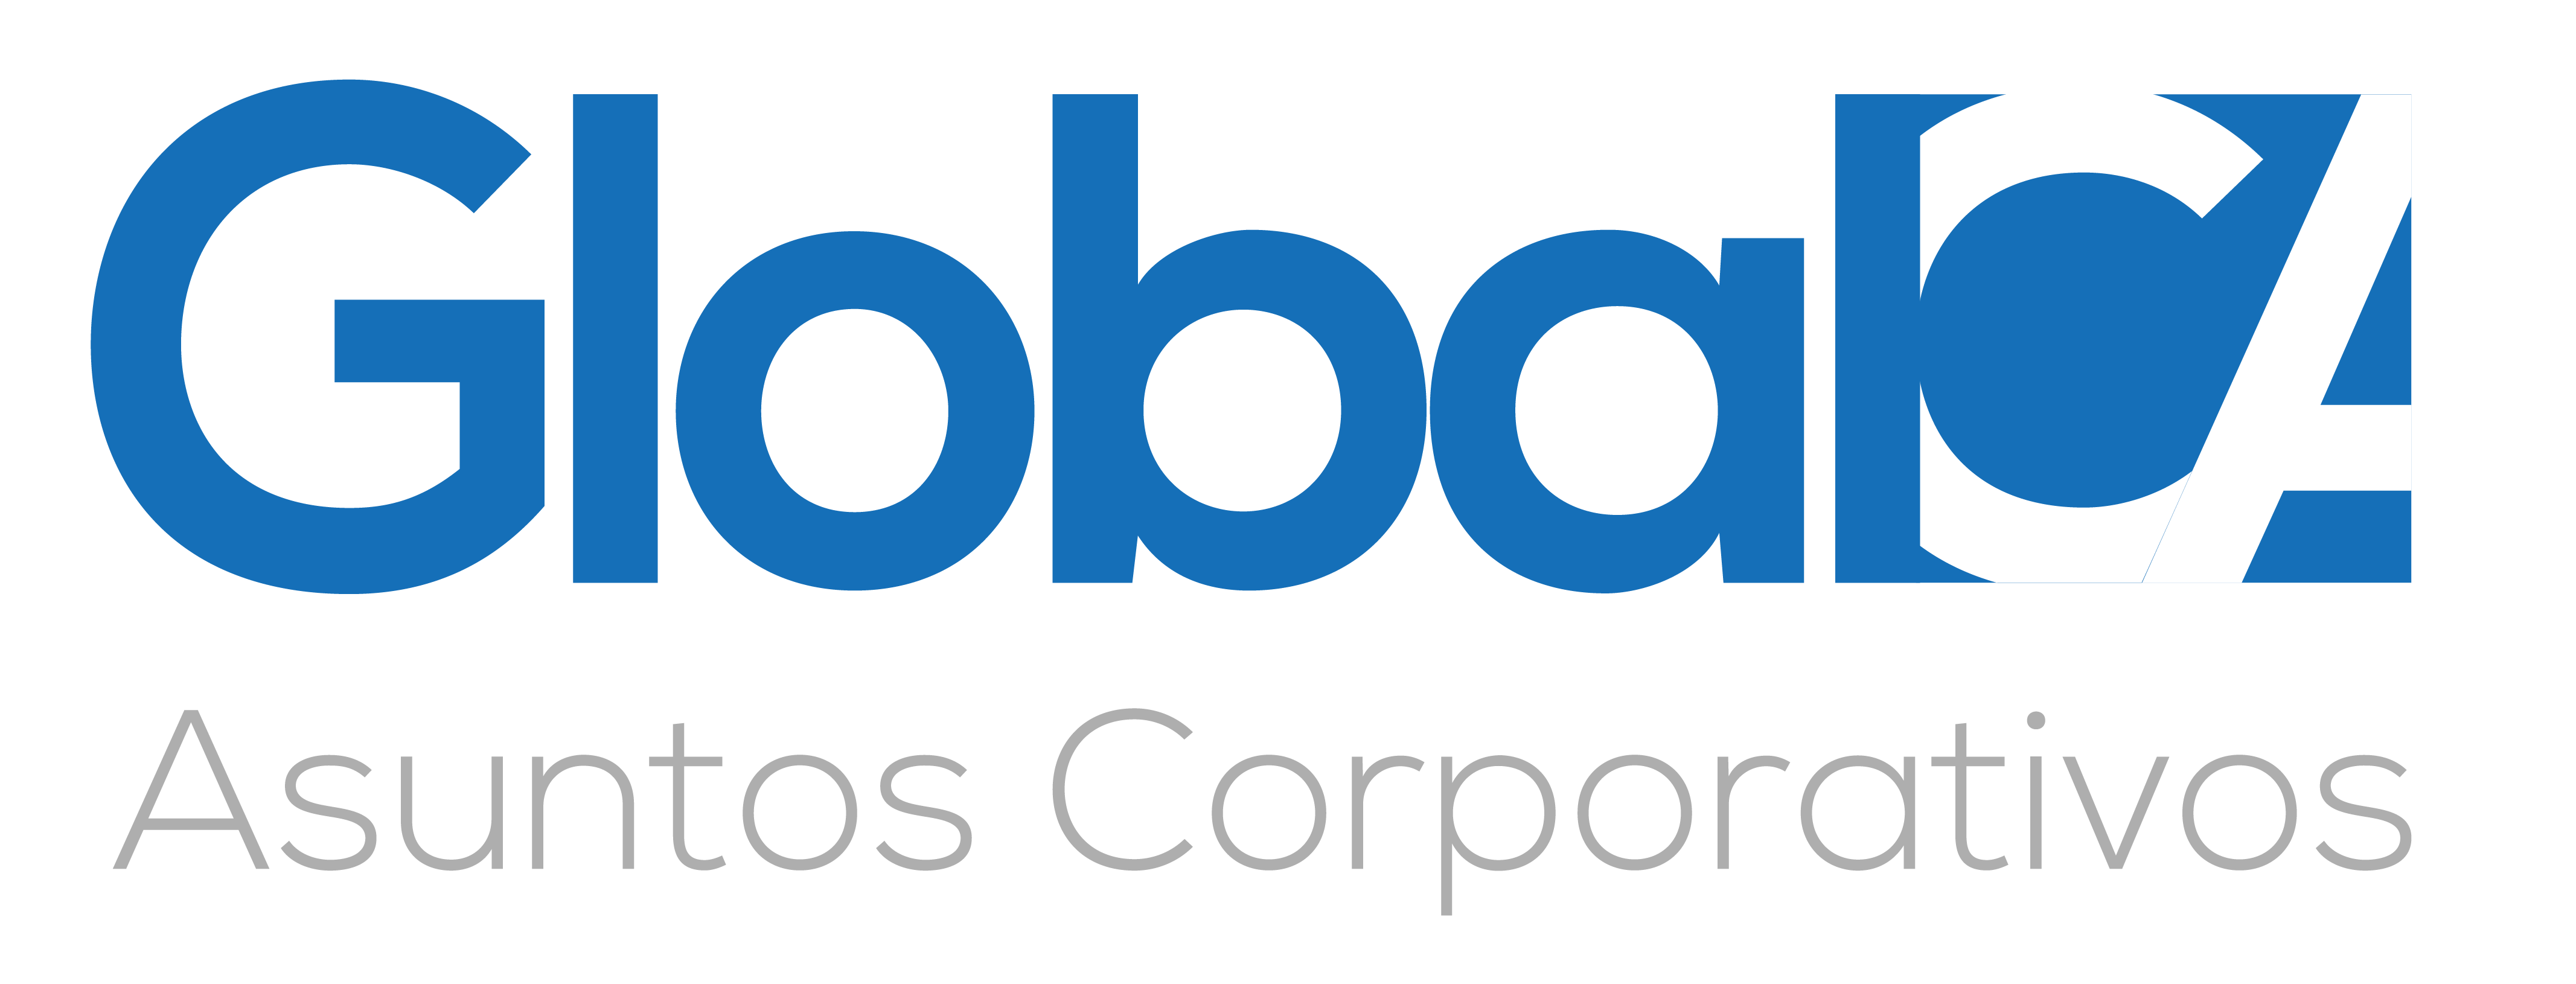 Global Corporate Affairs